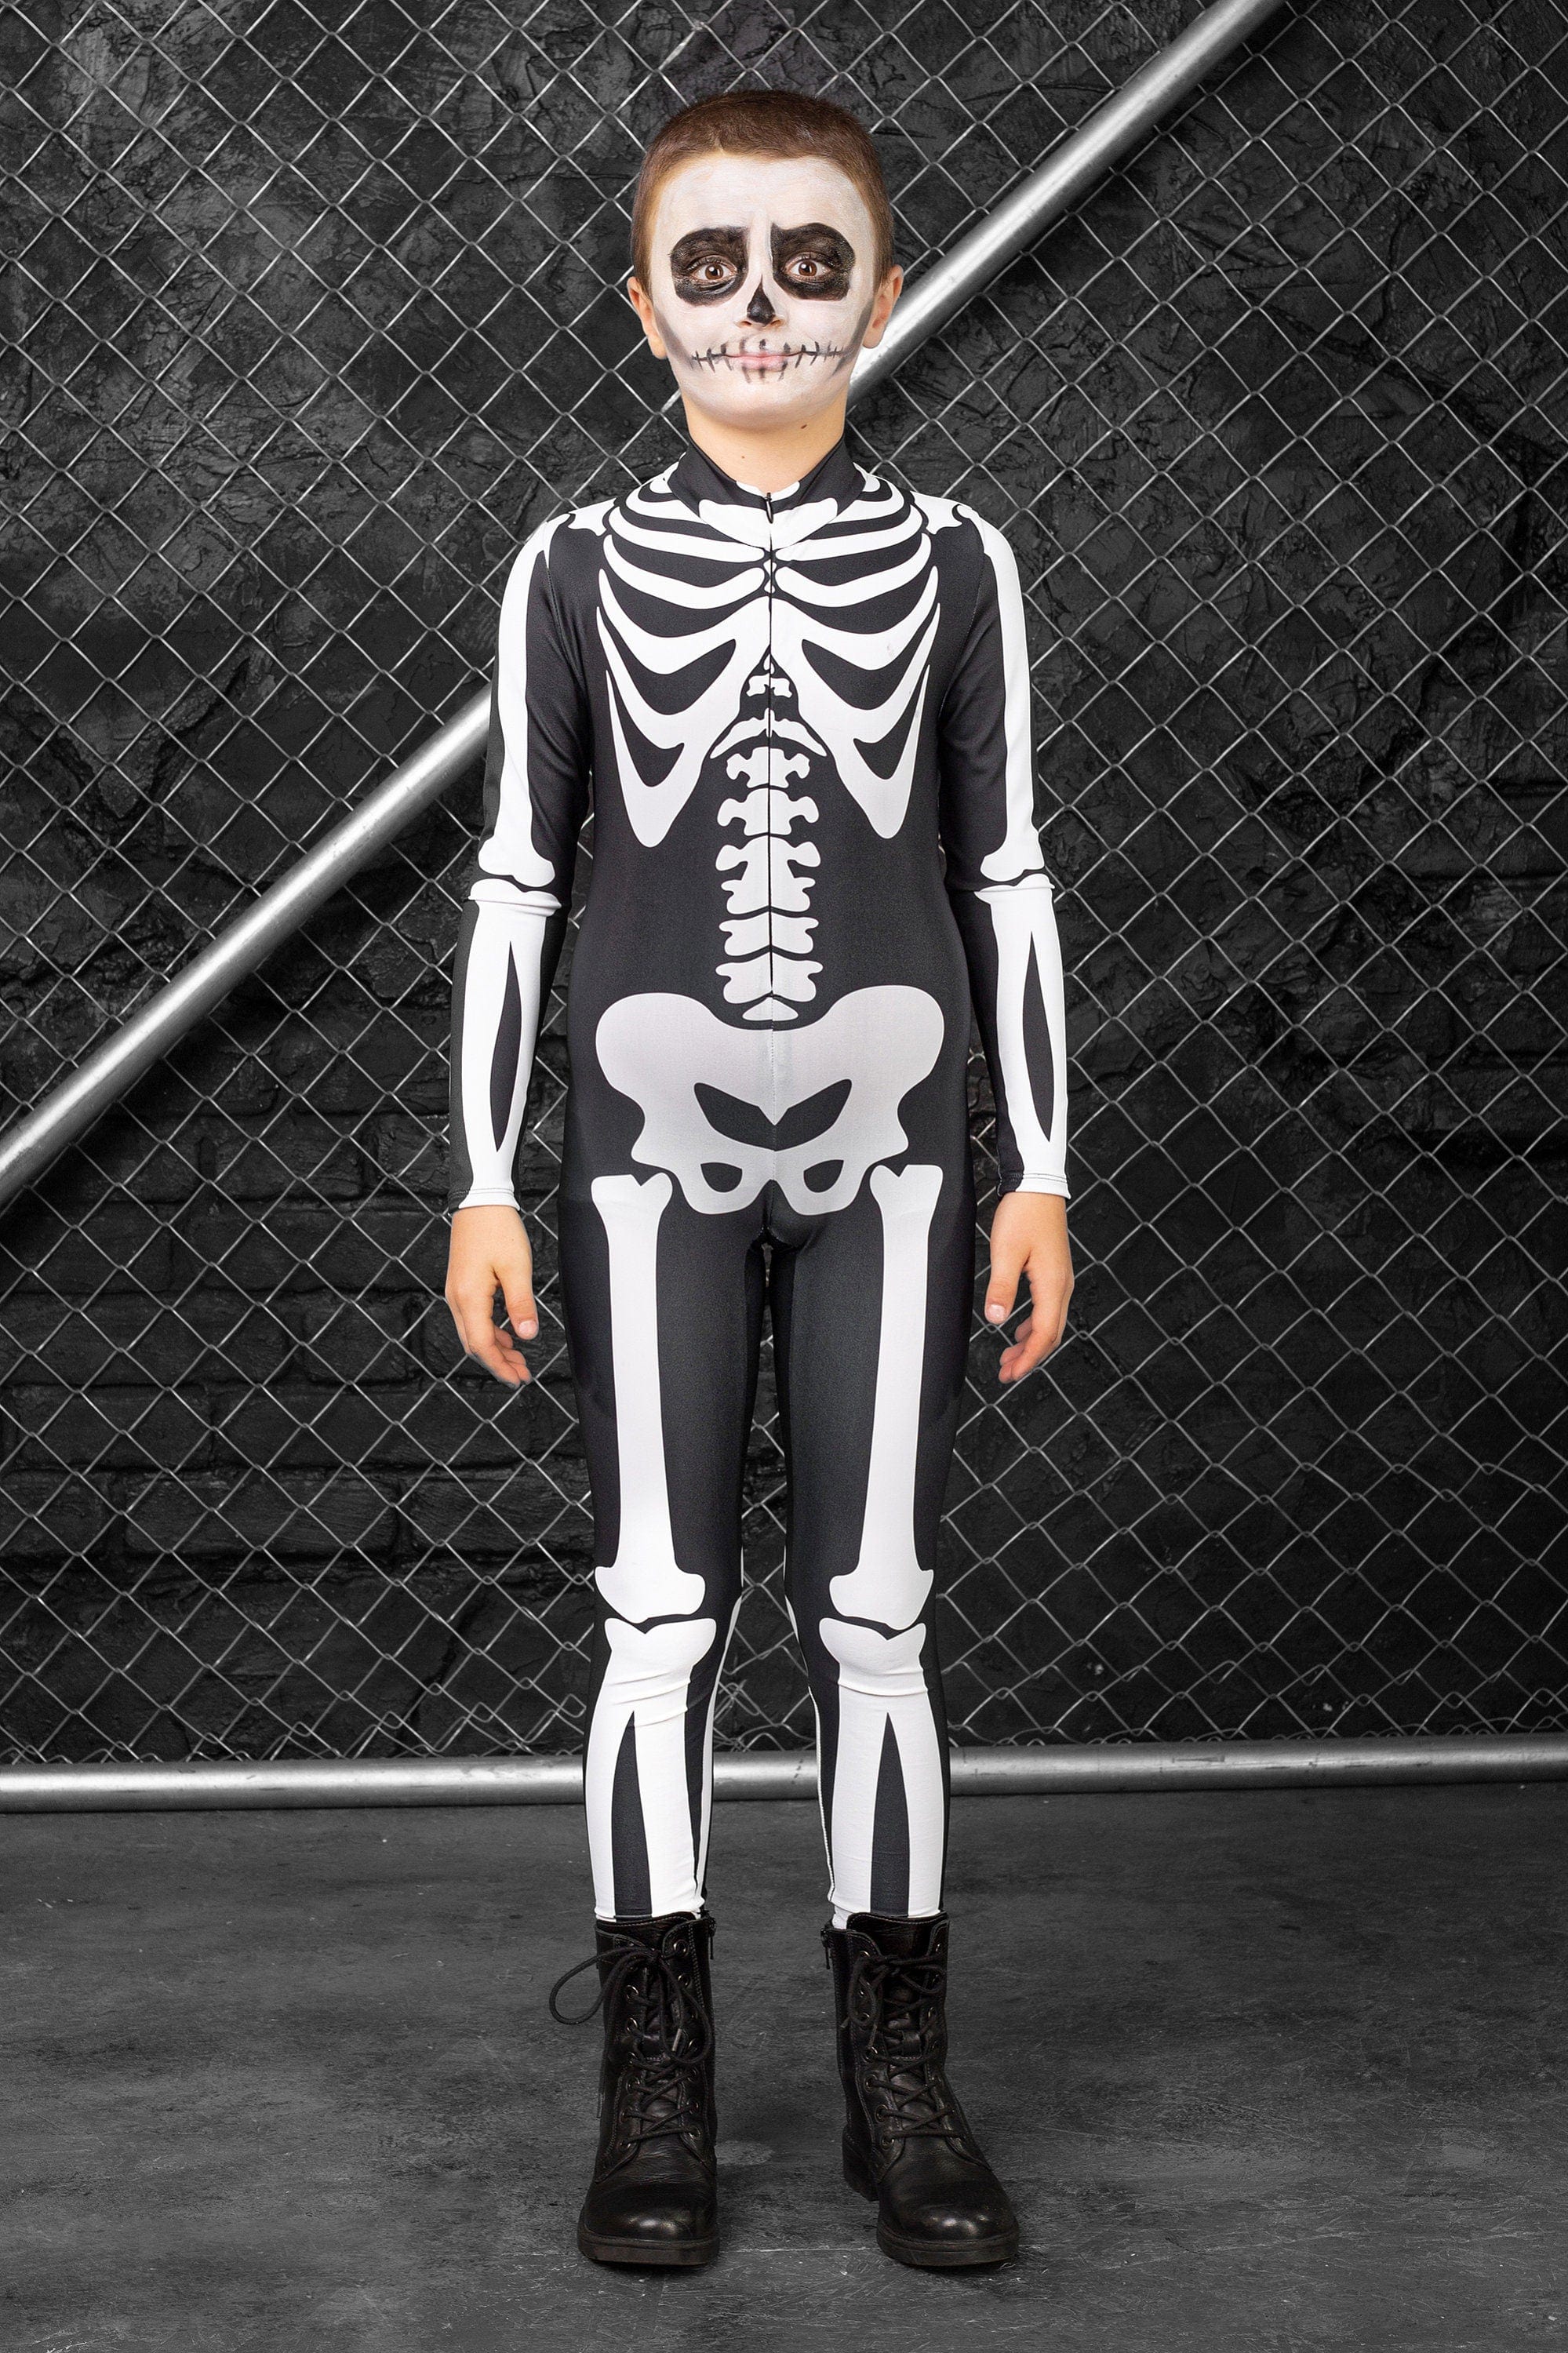 Boys Bossy Skeleton Costume